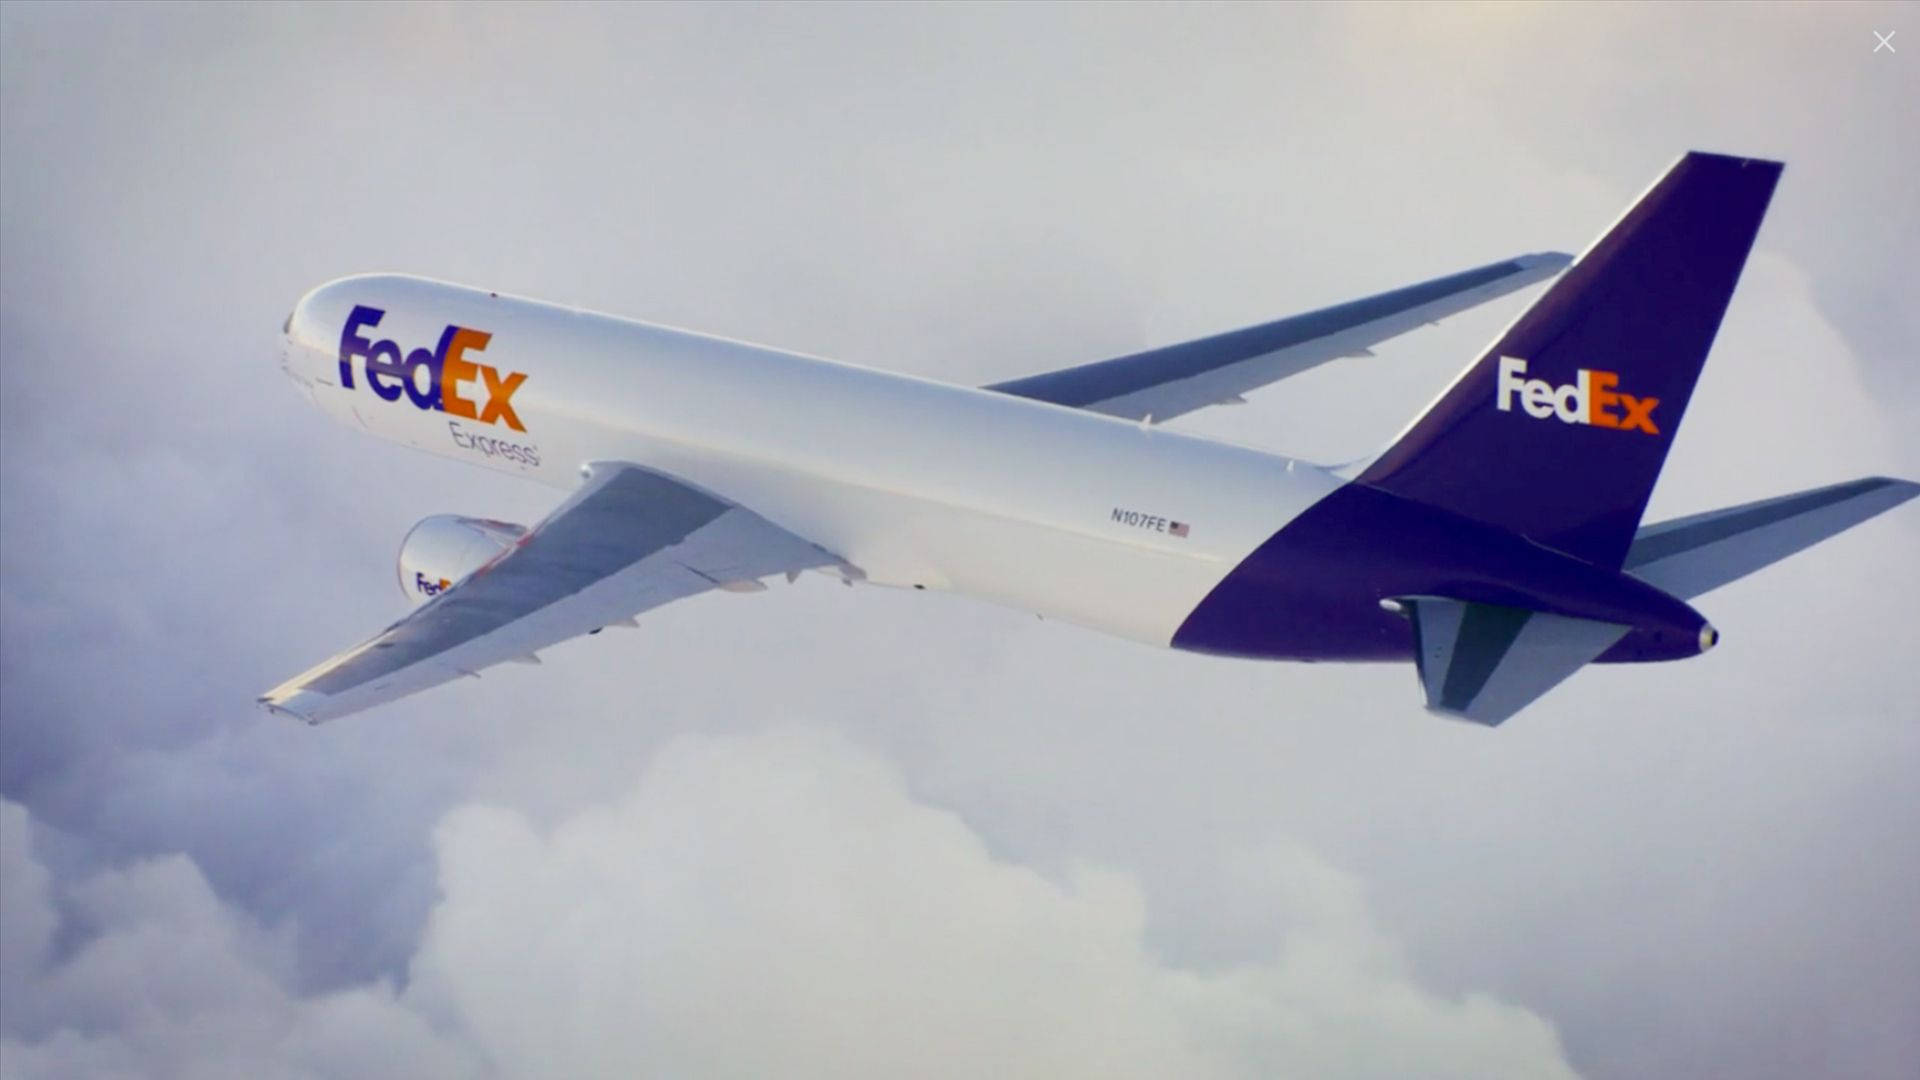 Fedex Express Aircraft Rear View Background